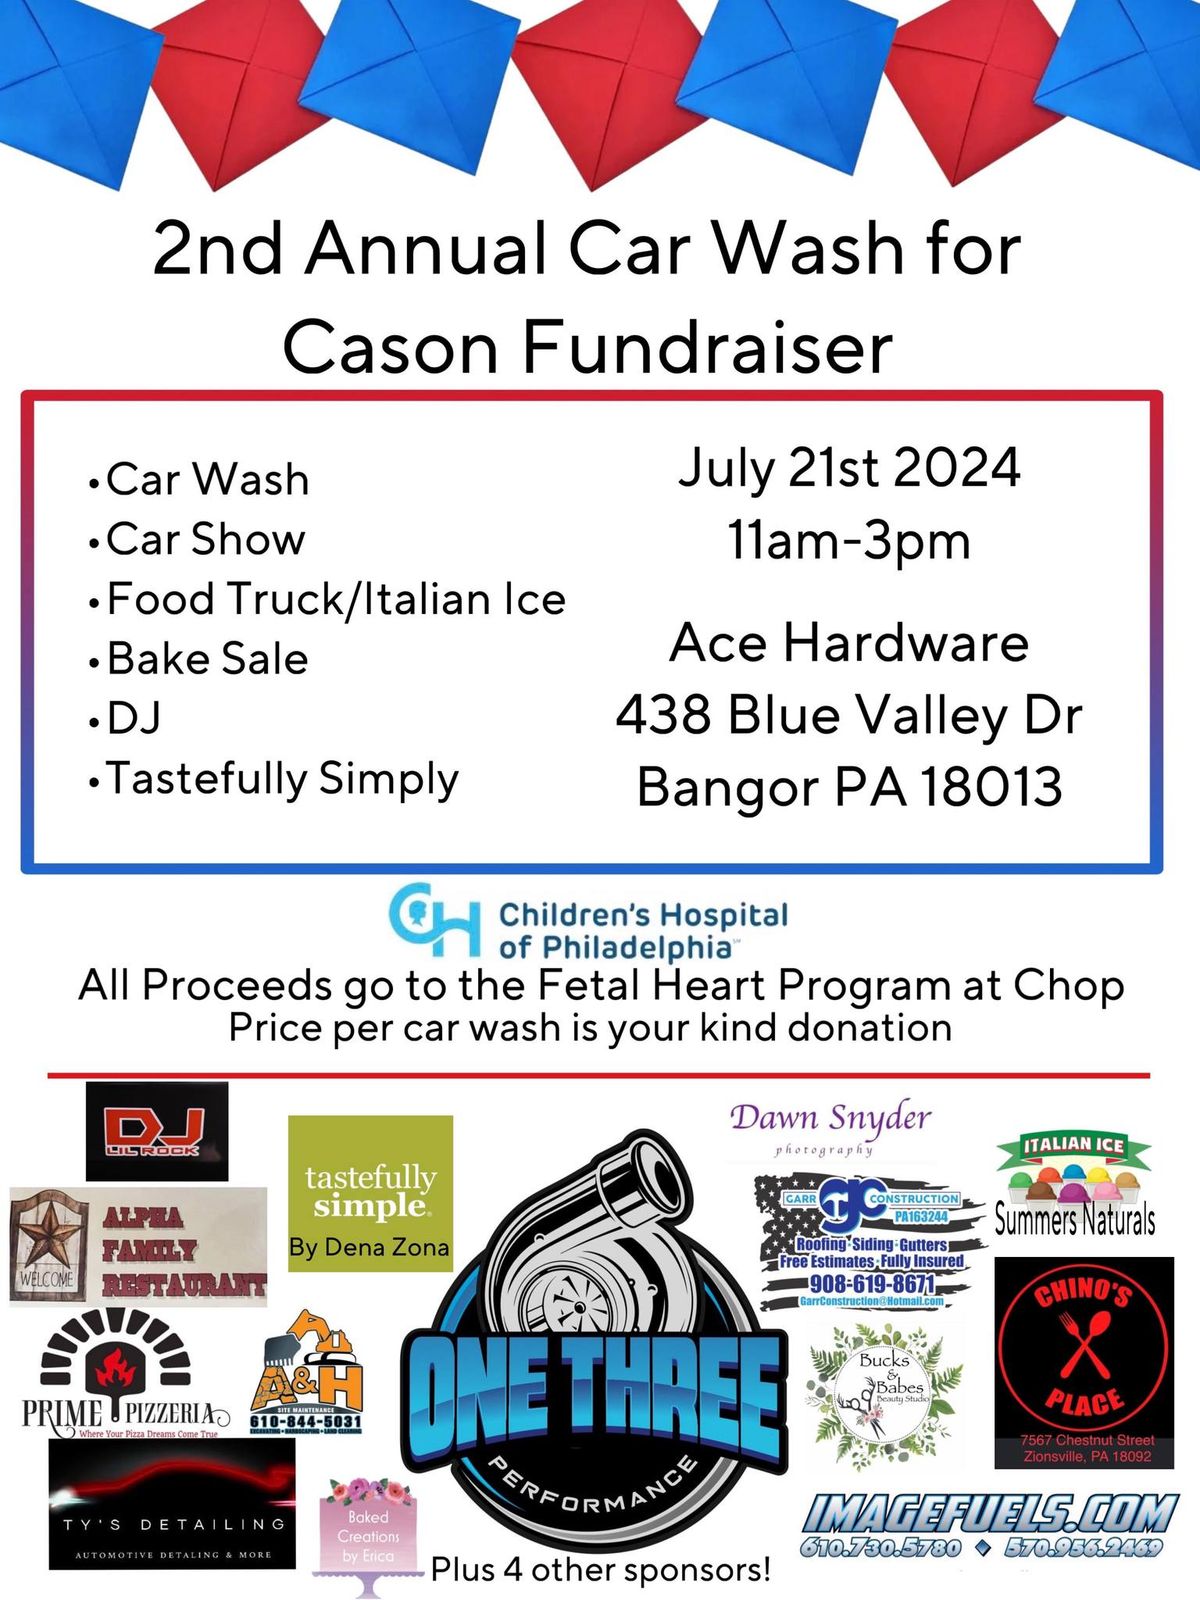 2nd Annual Car Wash for Cason fundraiser 2024